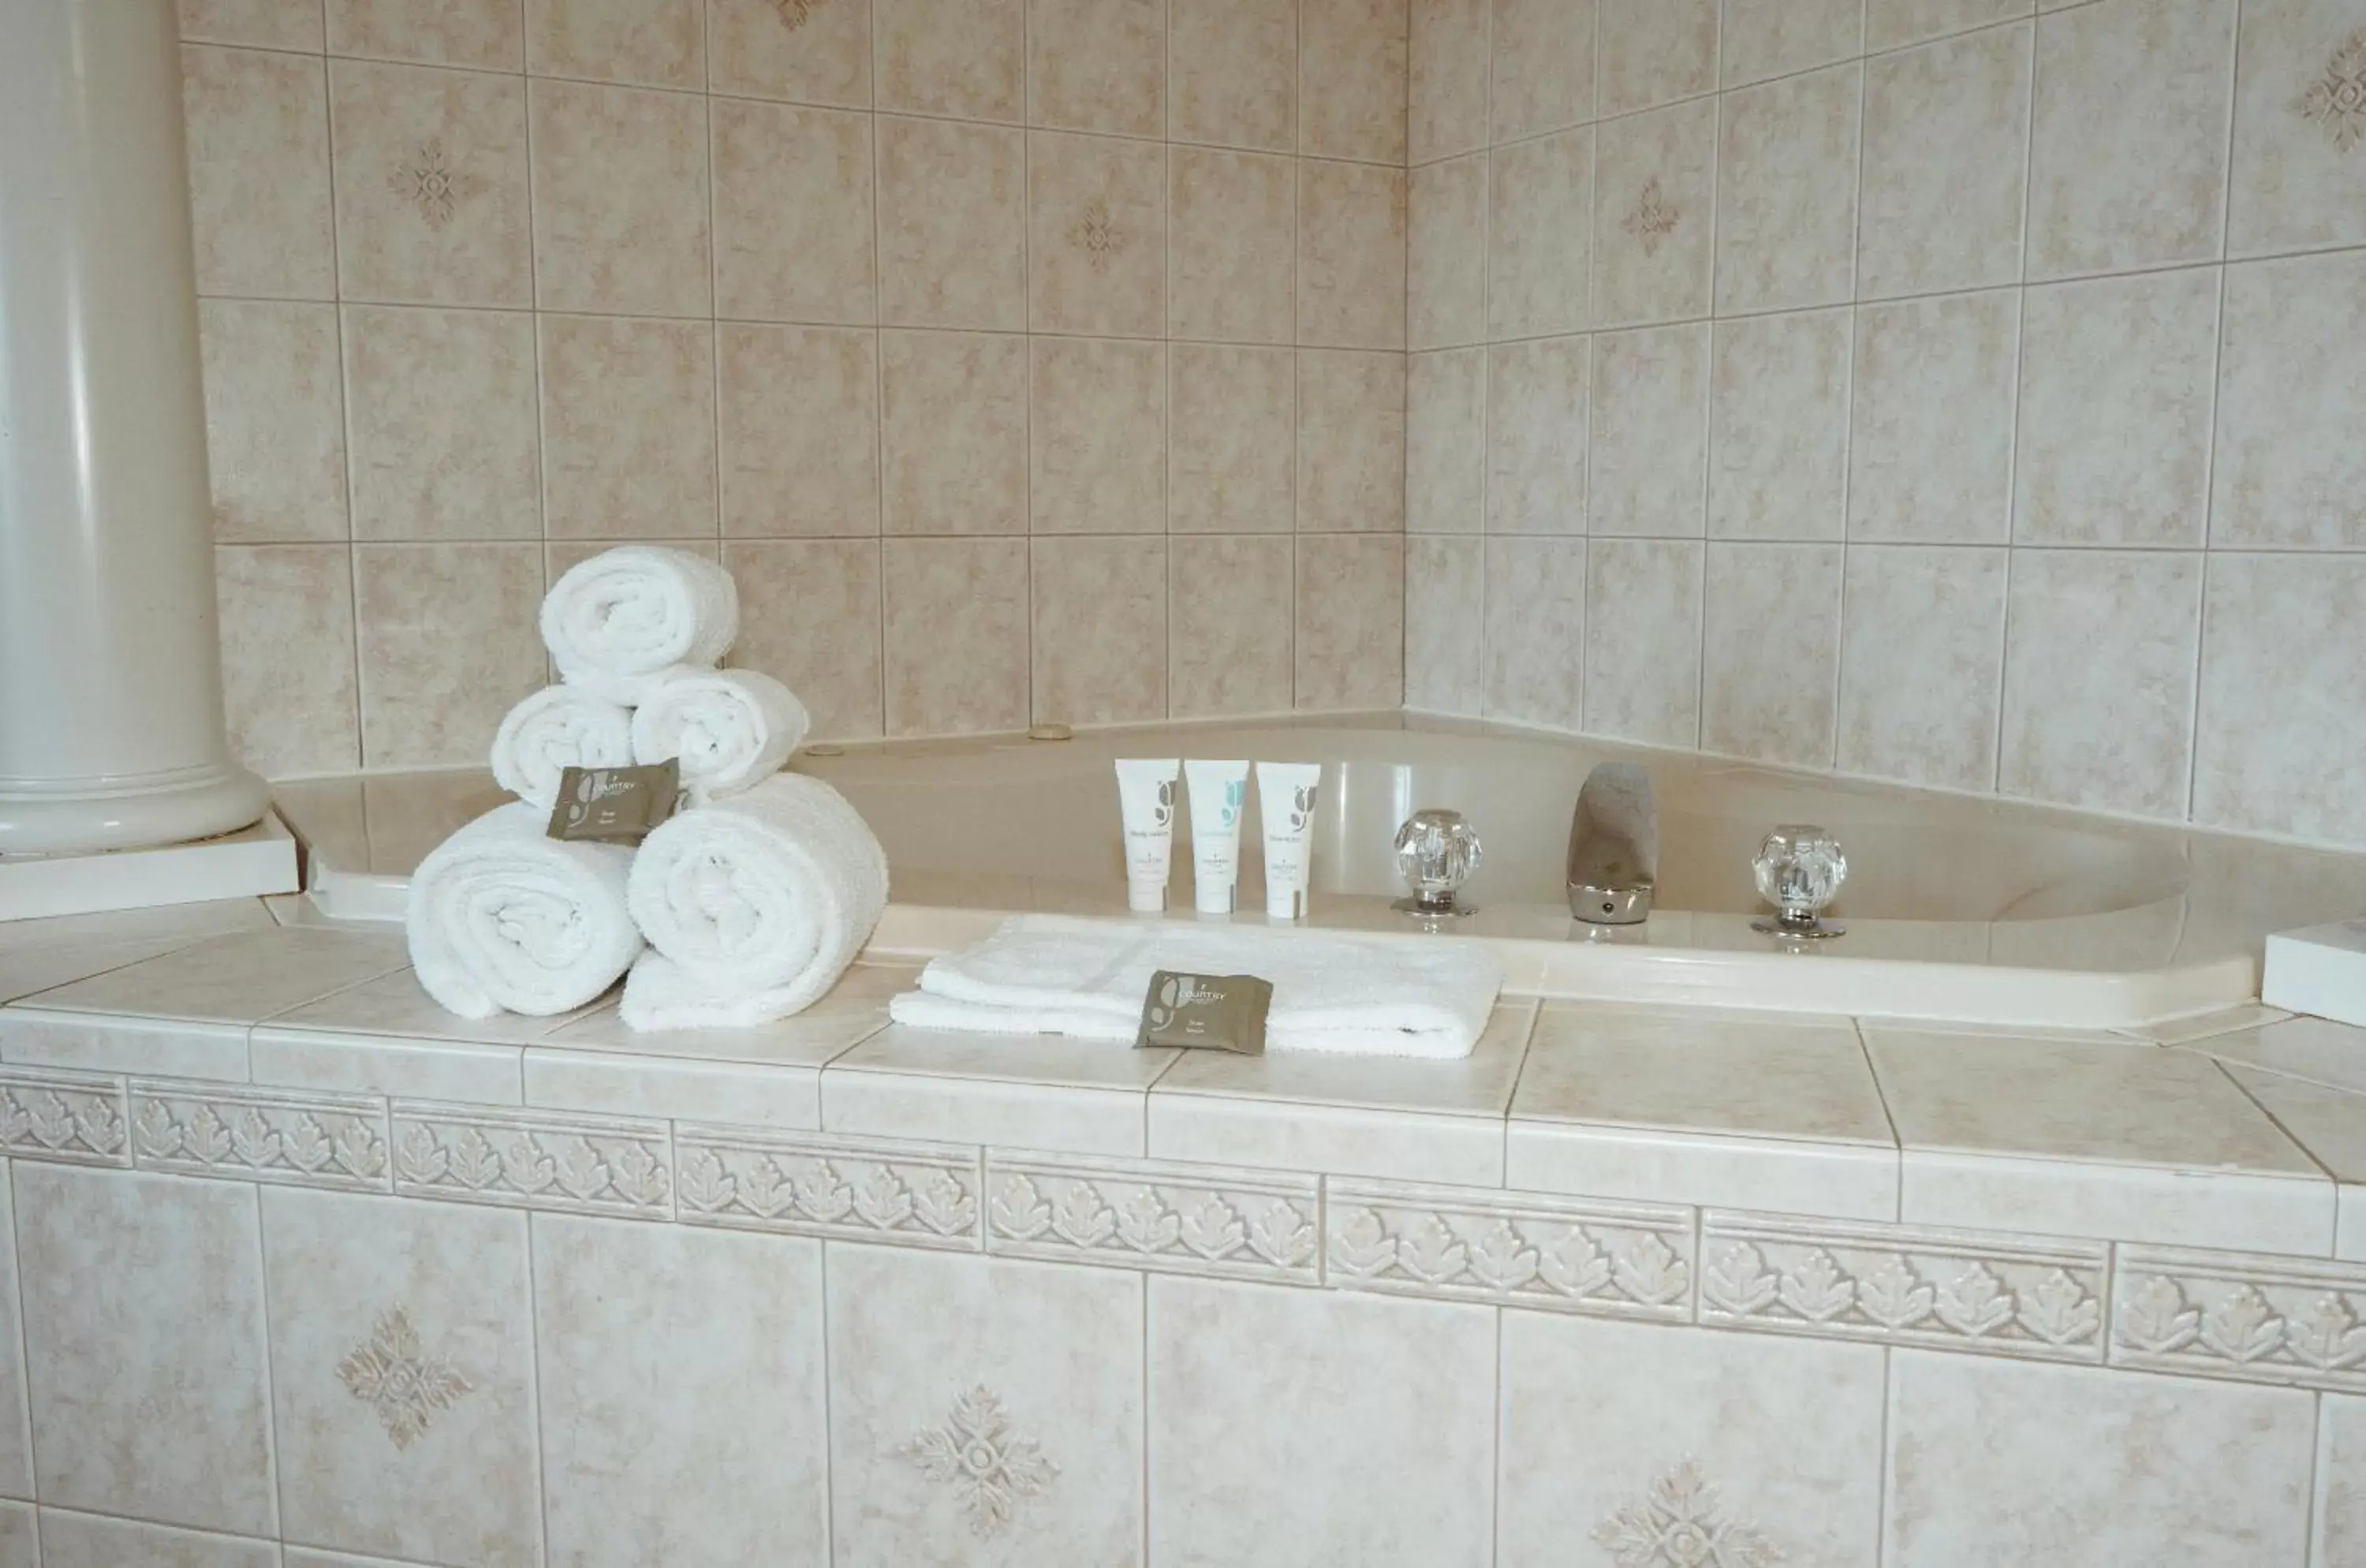 Hot Tub, Bathroom in Country Inn & Suites by Radisson, Myrtle Beach, SC